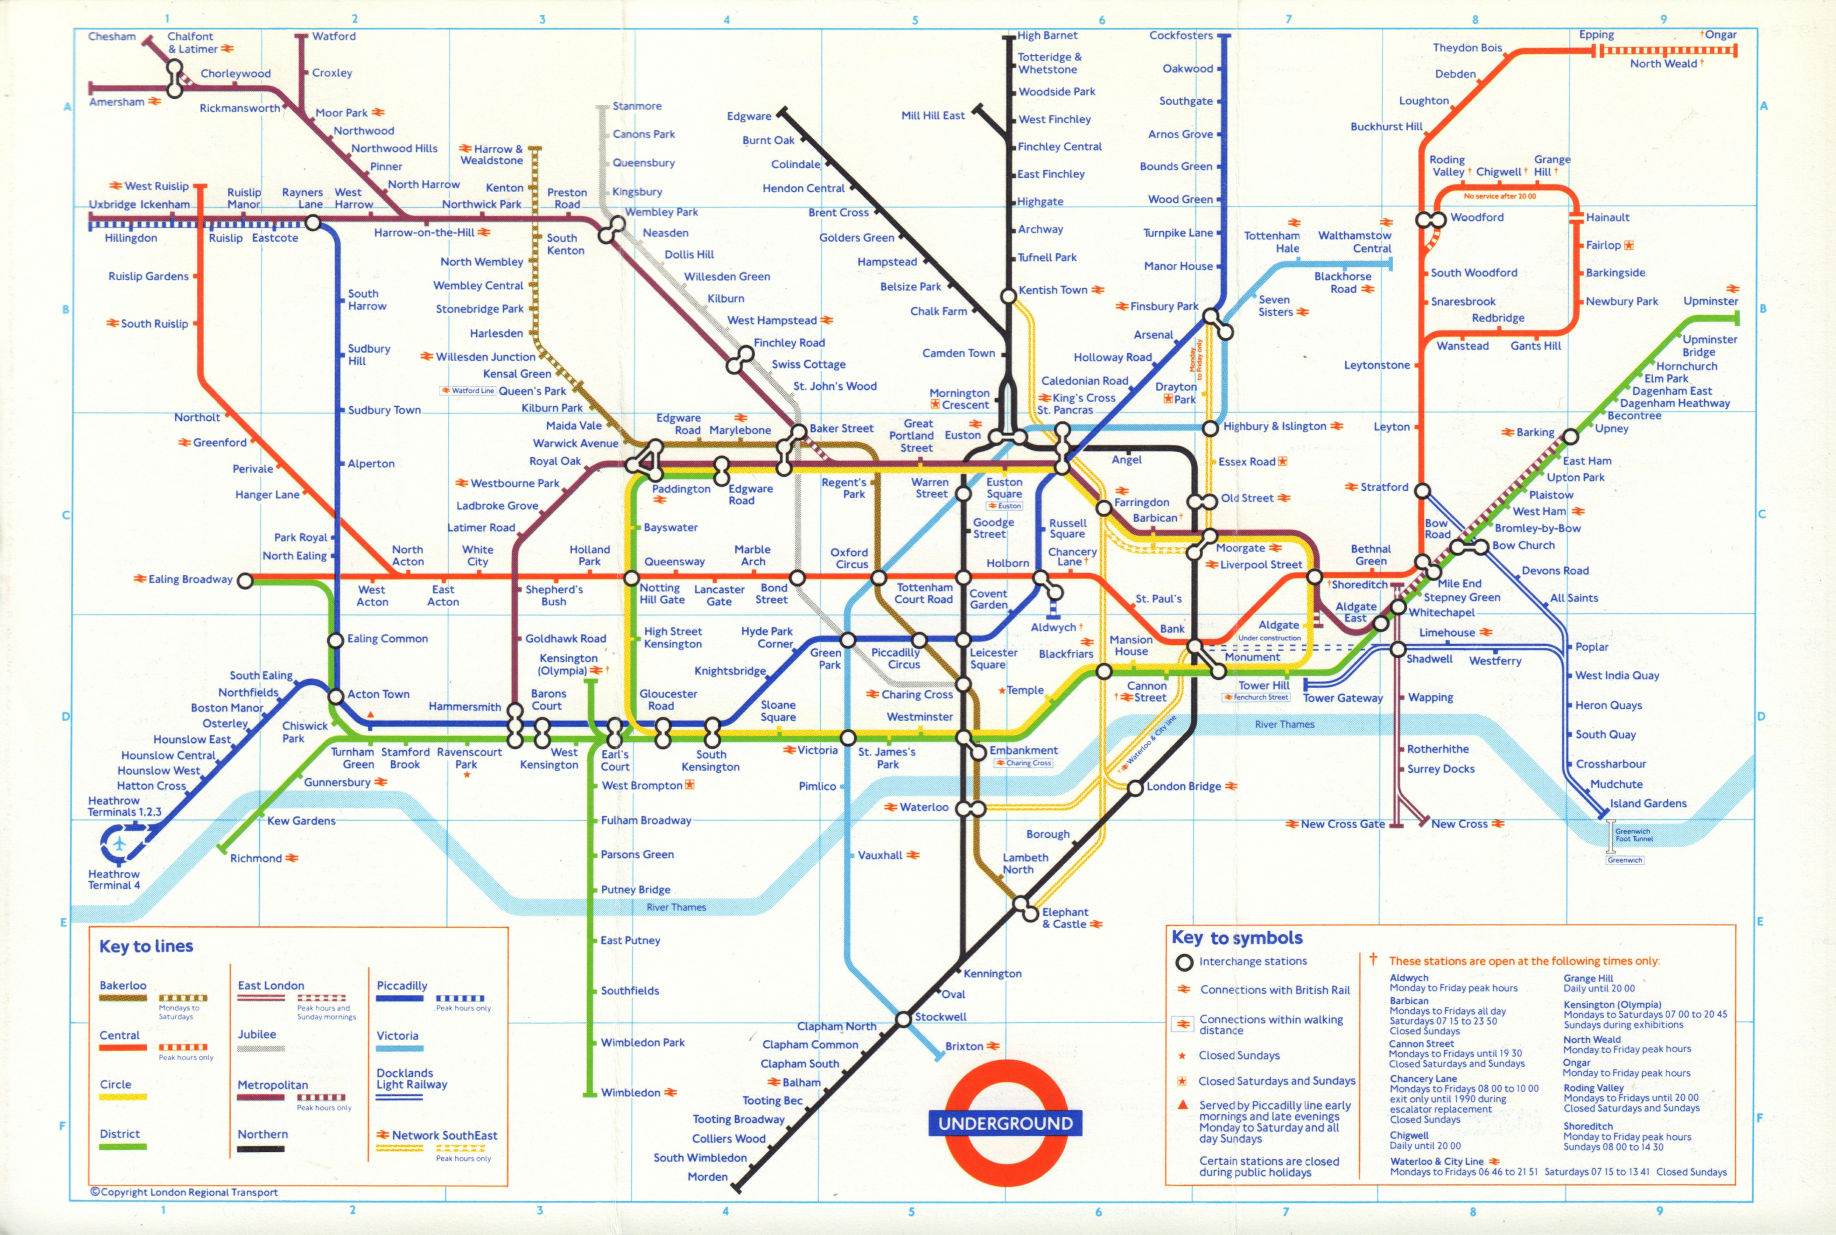 LONDON UNDERGROUND tube journey planner map. DLR u/c Bank-Shadwell. October 1988